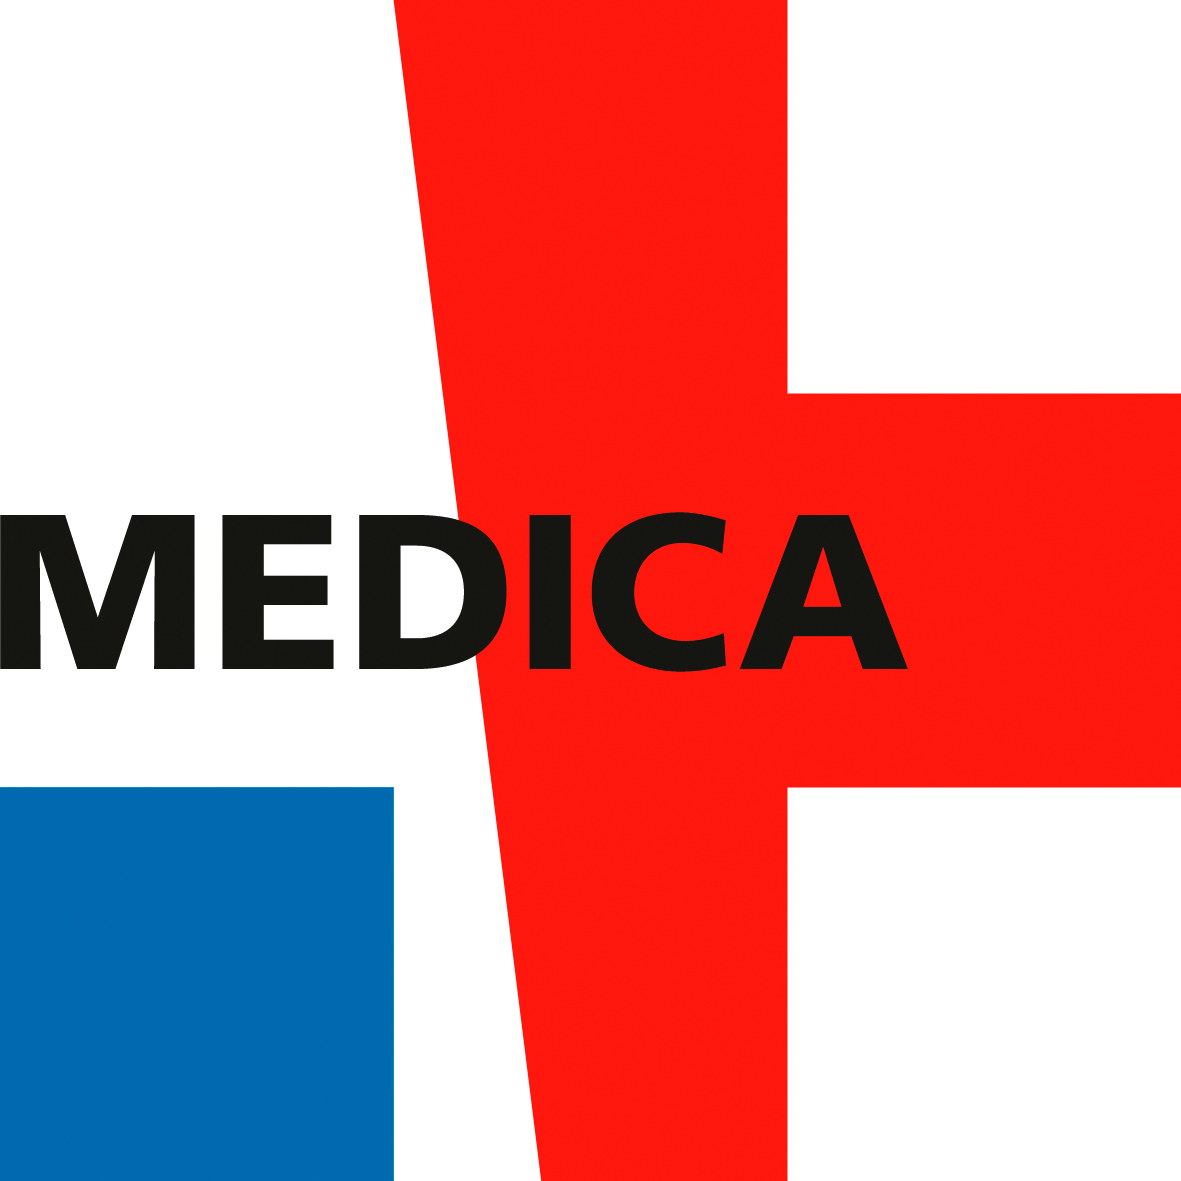 medica logo srgb